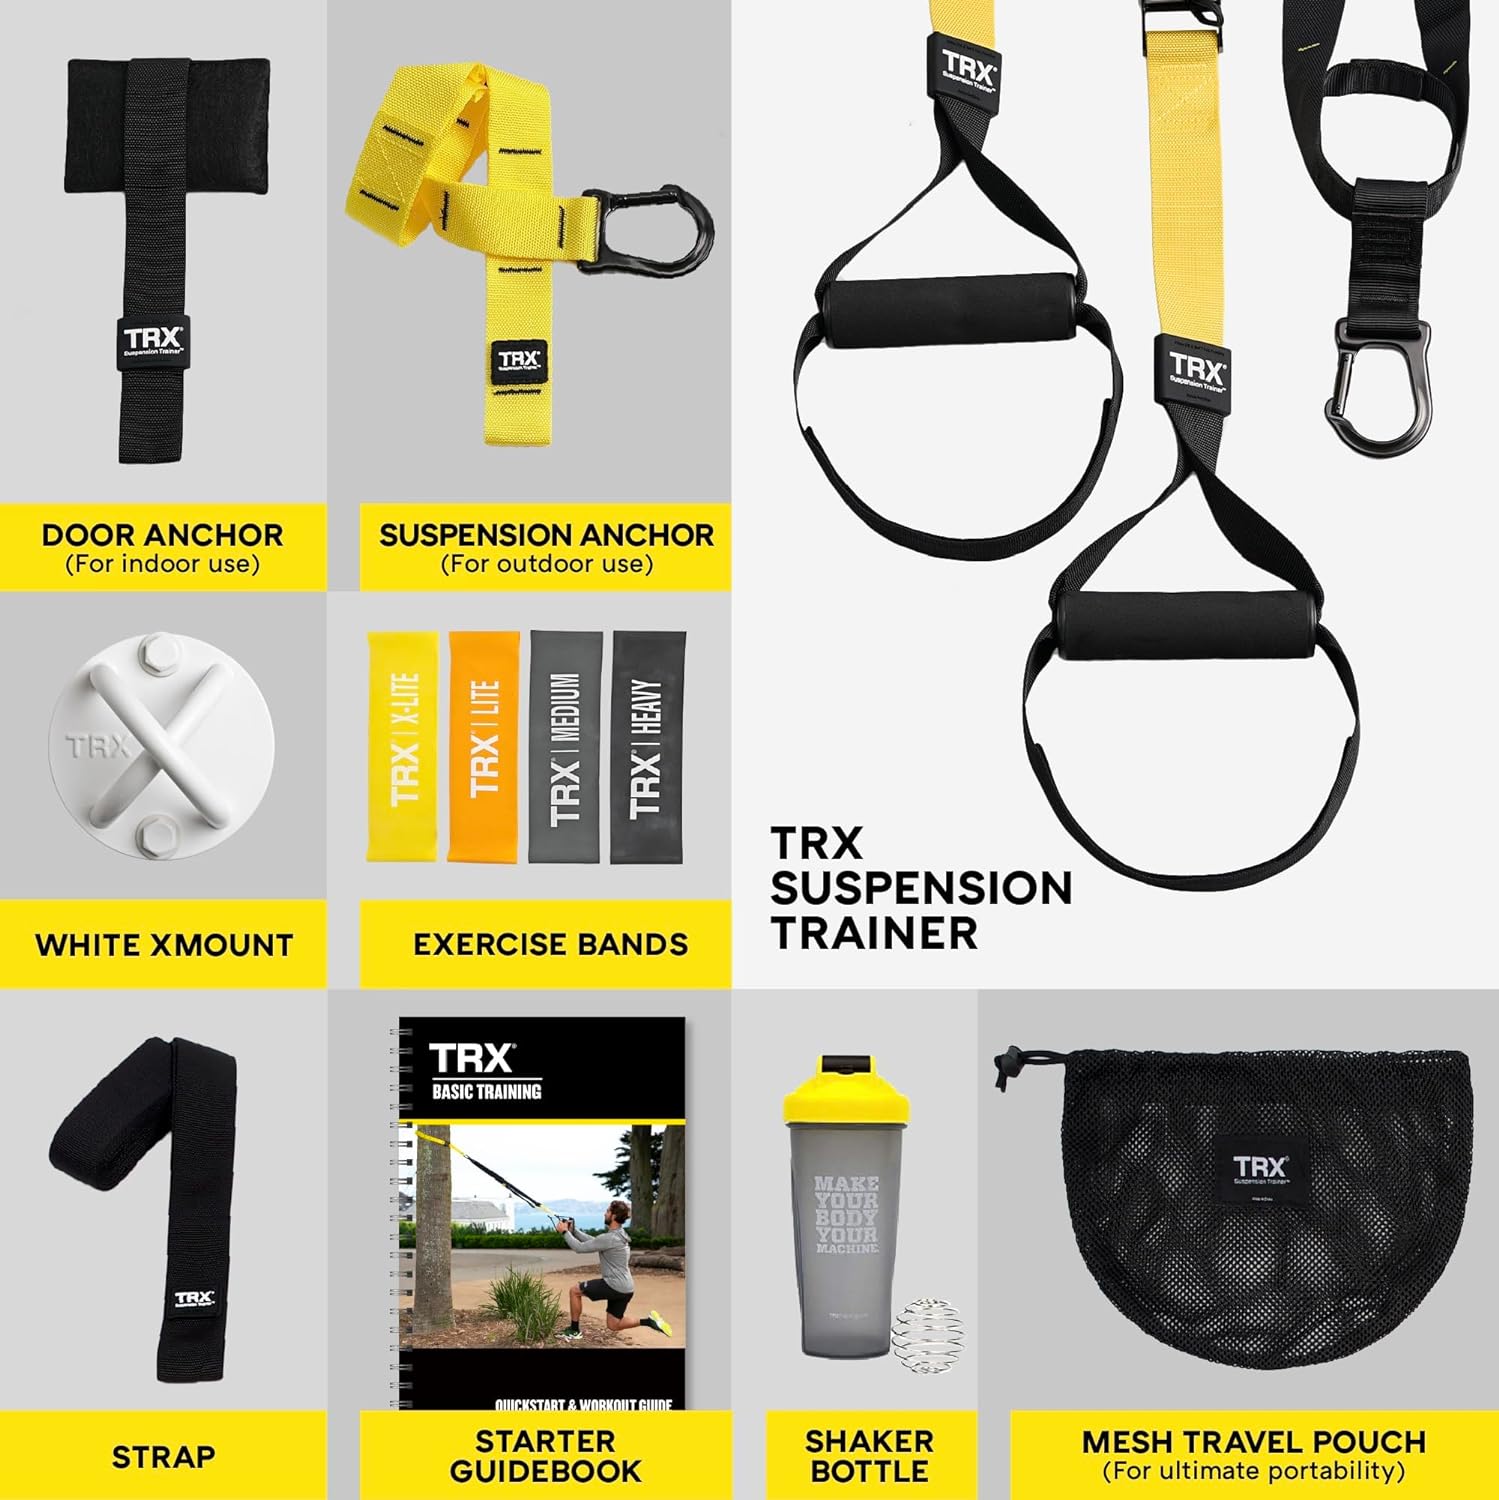 TRX Training All in One Suspension Trainer Exercise Equipment Bundle